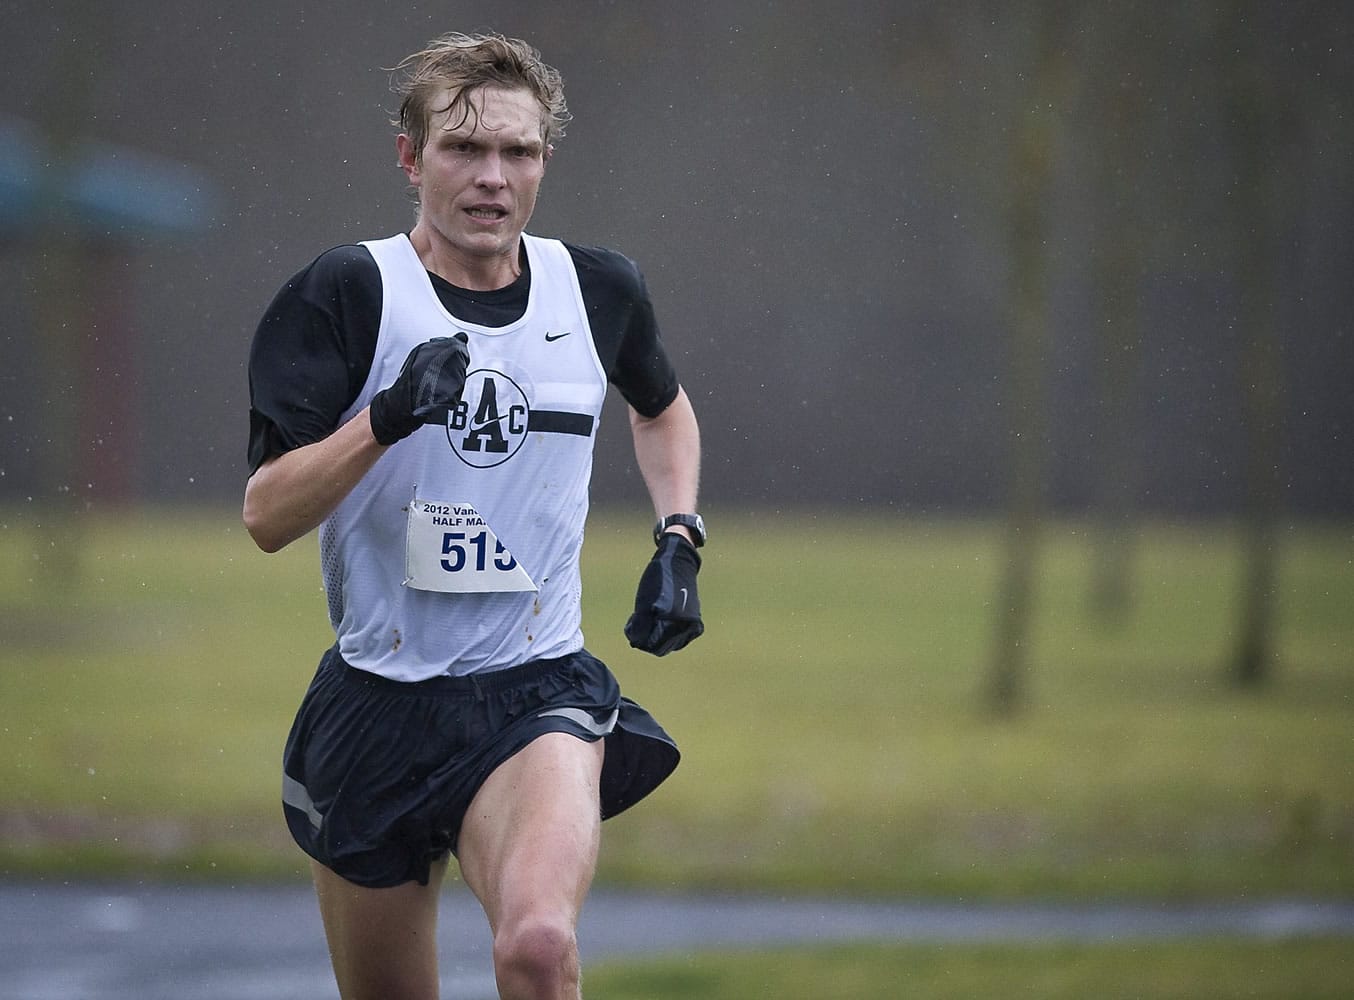 Jon Marcus, 28, led the annual Vancouver Lake Half Marathon from start to finish on Sunday, winning in 1:09:38.